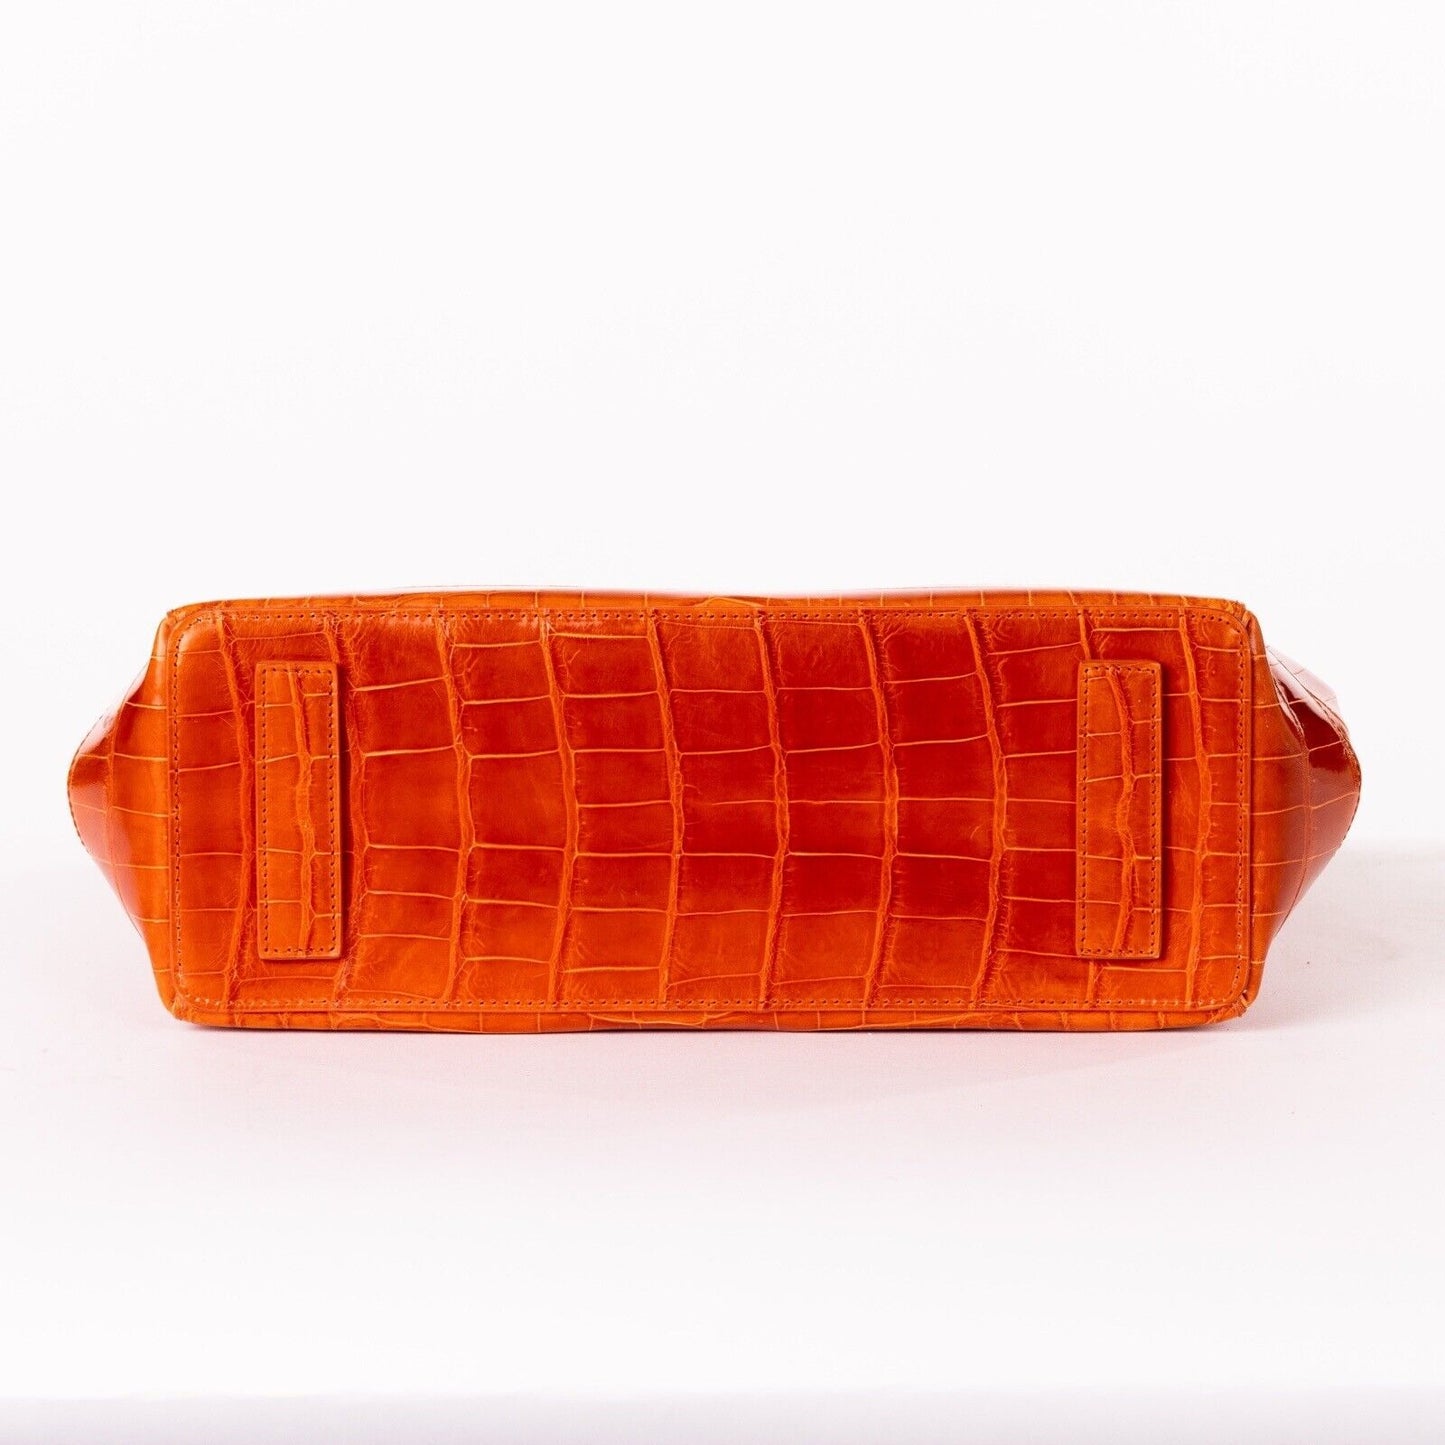 Bottom View Of Orange Handbag